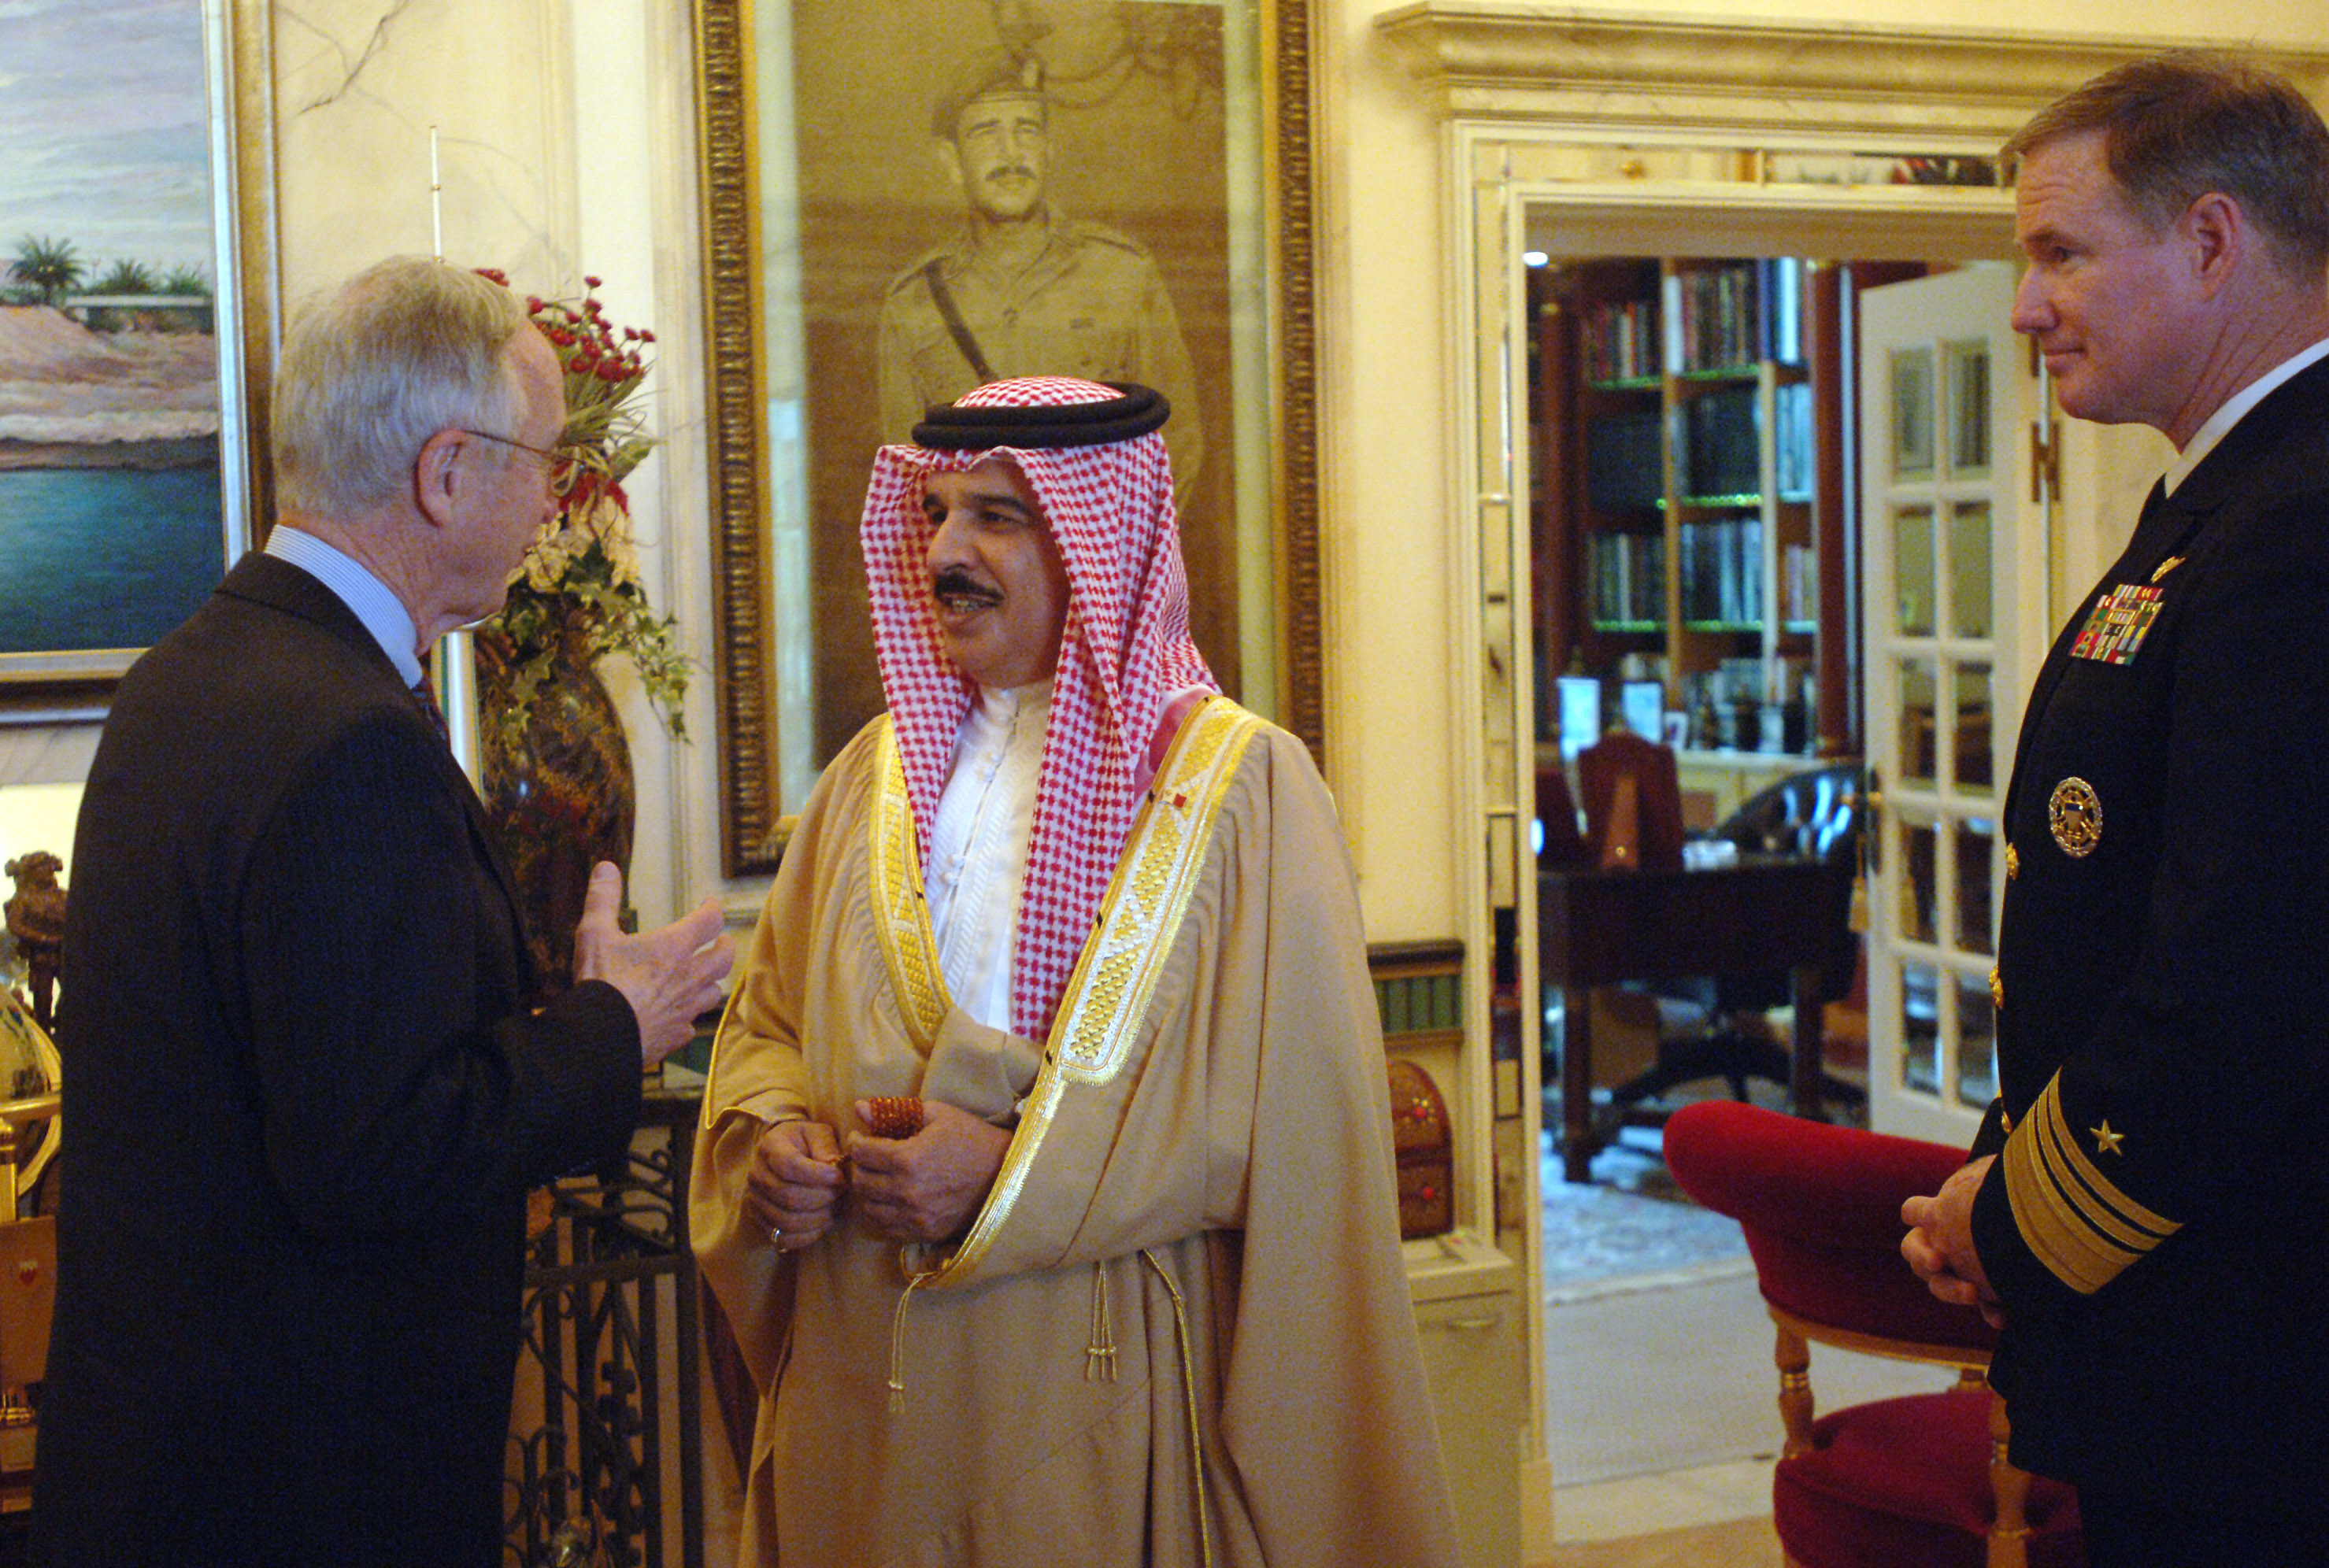 Deputy Secretary of Defense Gordon England, left, visits with King of Bahrain Hamad bin Isa al-Khalifa while Commander, U.S. Naval Forces Central Command, Vice Adm. Patrick Walsh looks on, Manama, Bahrain, January 22, 2007.